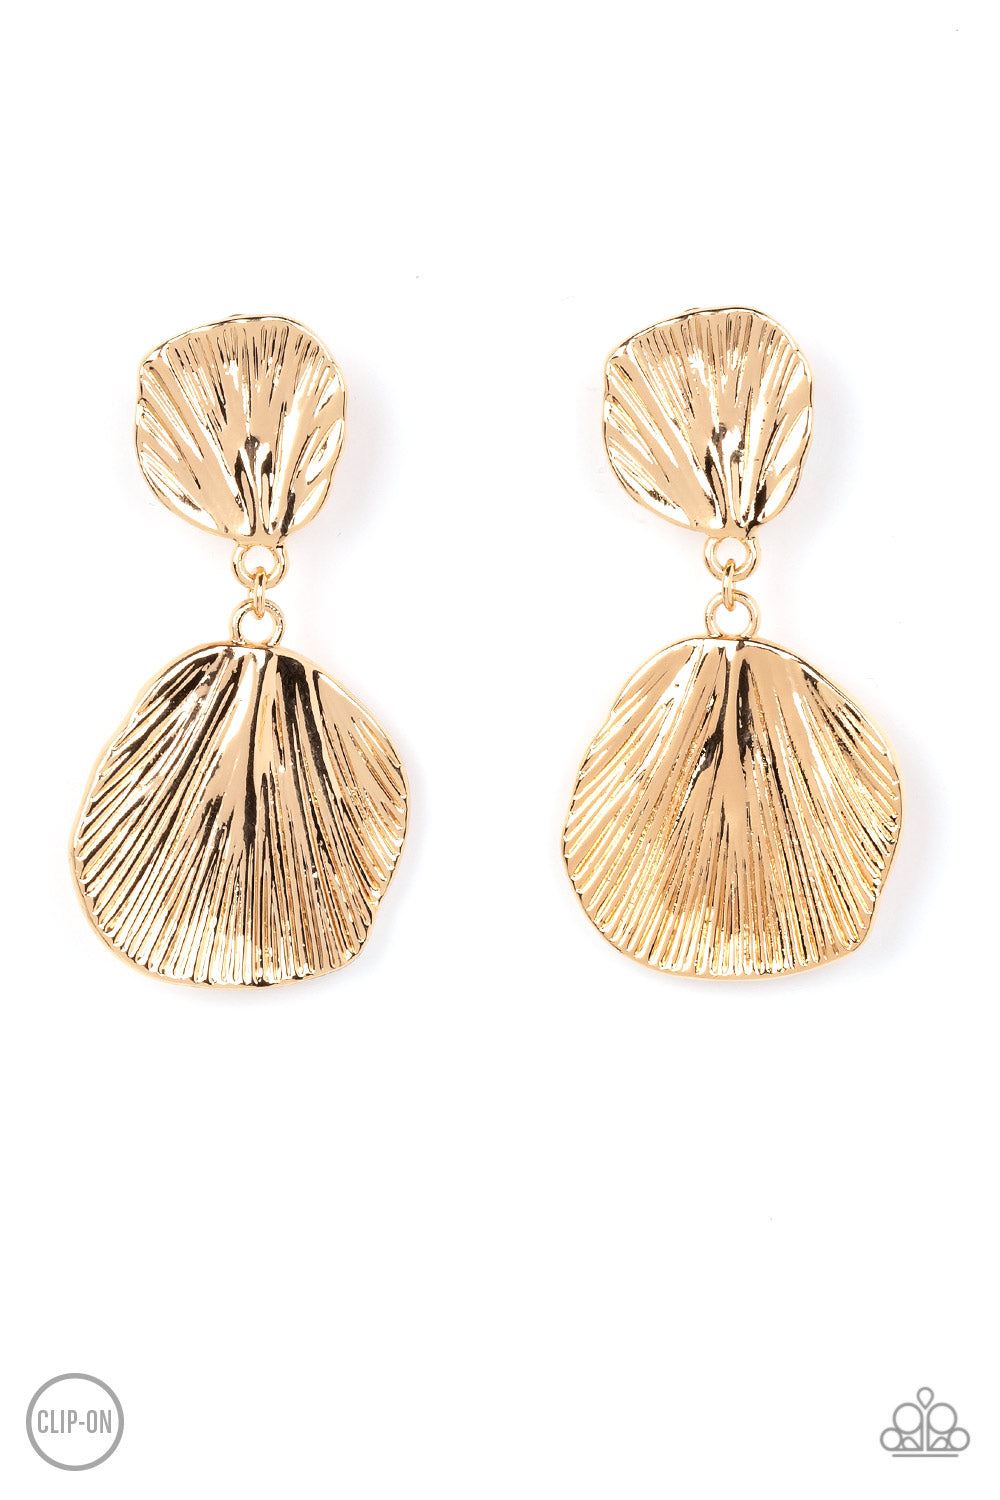 Paparazzi Accessories - Metro Mermaid #E422 Peg - Gold Earrings